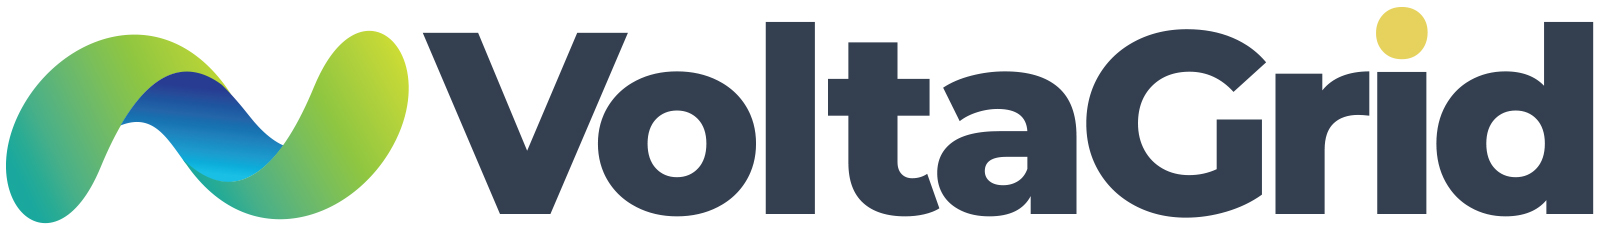 VoltaGrid_Logo_L